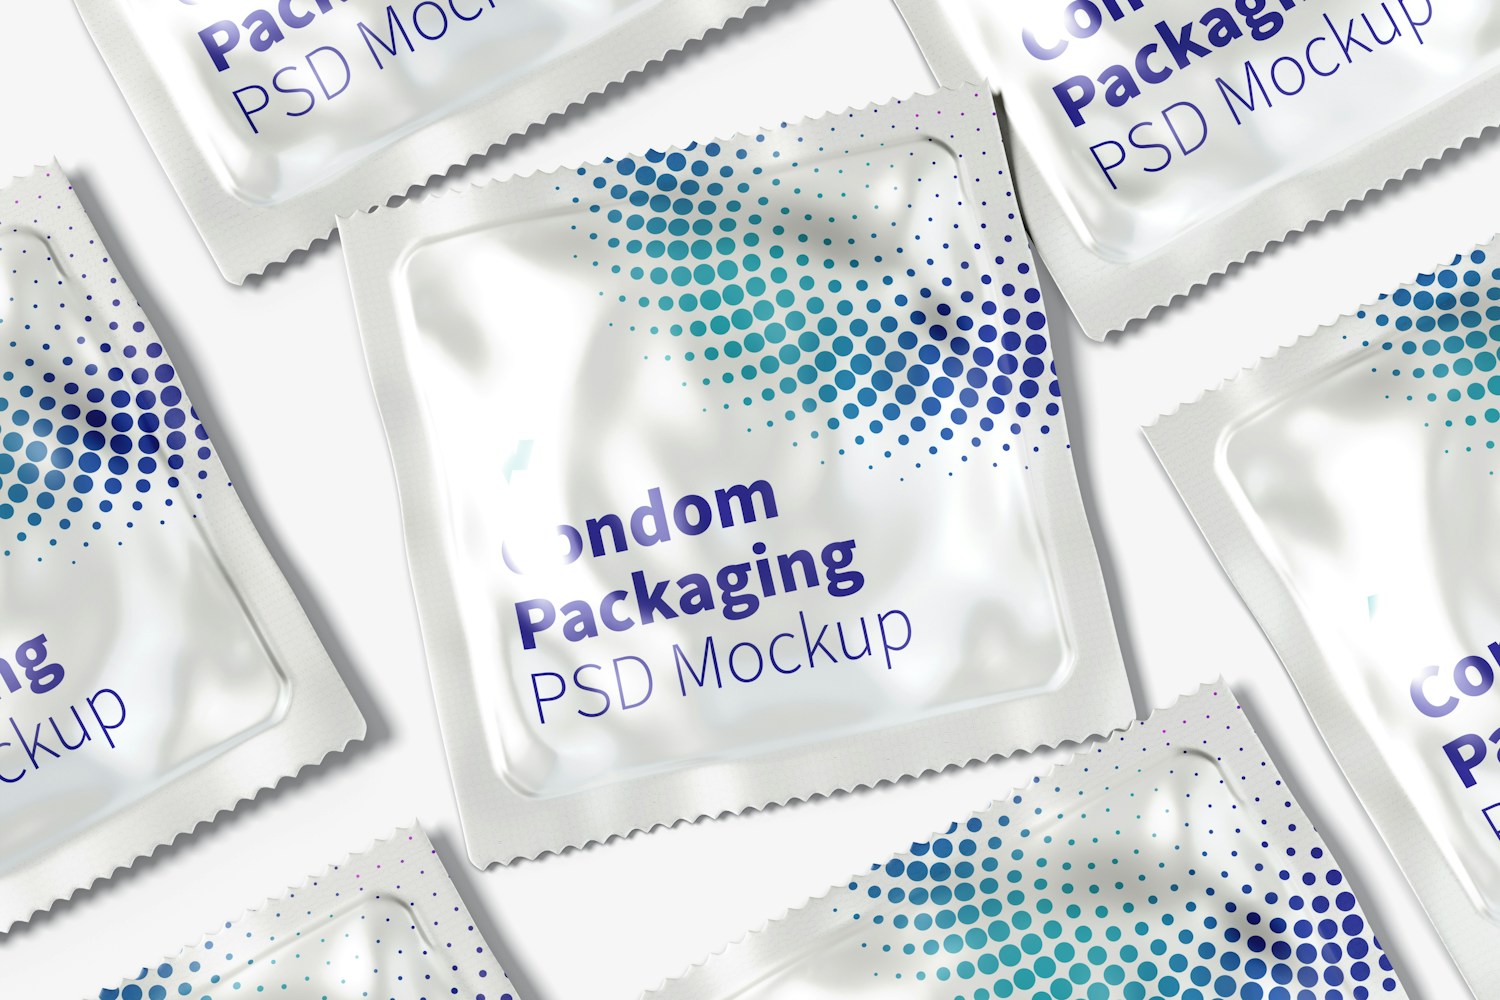 Condom Packaging Mockup, Close Up